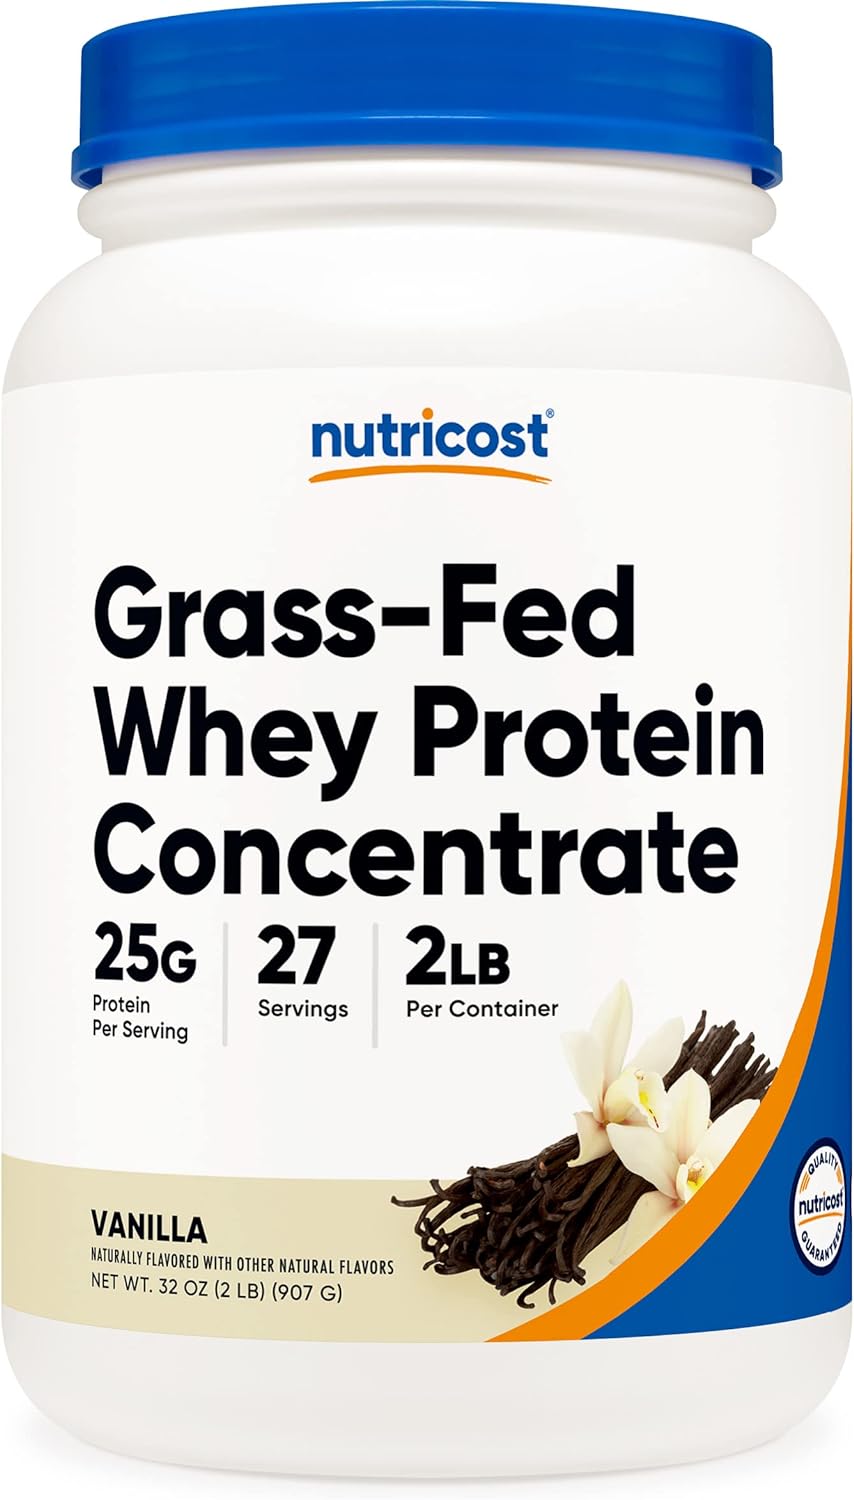 Nutricost Grass-Fed Whey Protein Concentrate (Vanilla) 2LBS - Undenatured, Non-GMO, Gluten Free, Natural Flavors